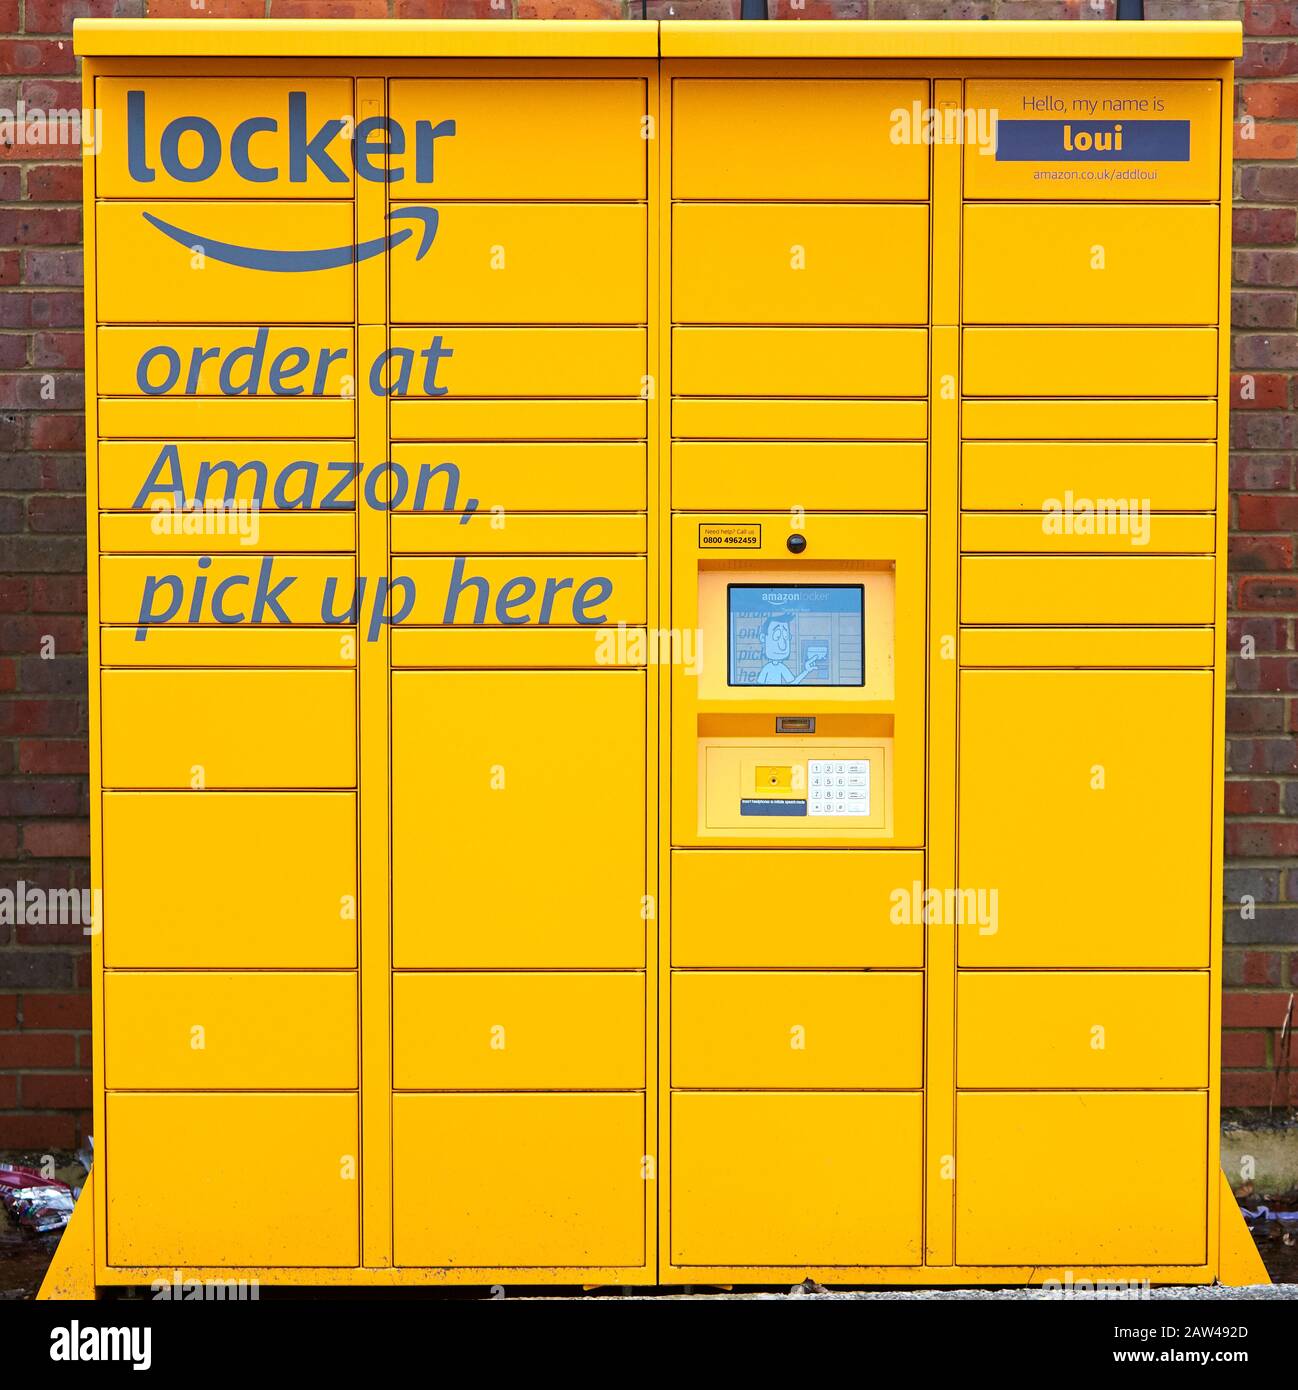 Amazon Locker self service kiosk in Great Missenden, Buckinghamshire Stock Photo